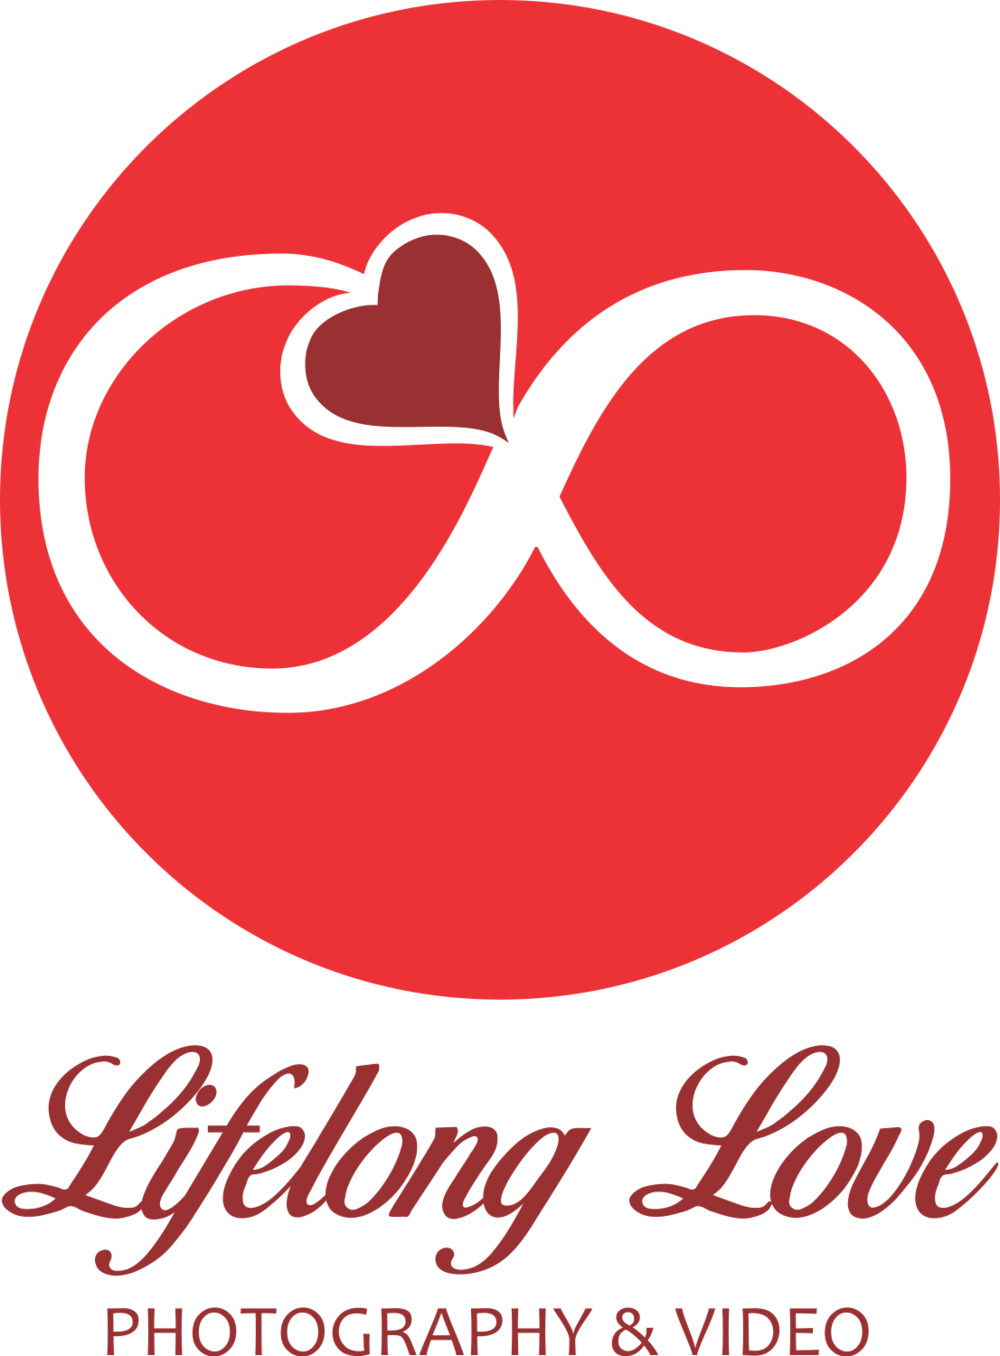 Lifelong Love Photography And Video Logo - Angel Tube Station (1000x1356)